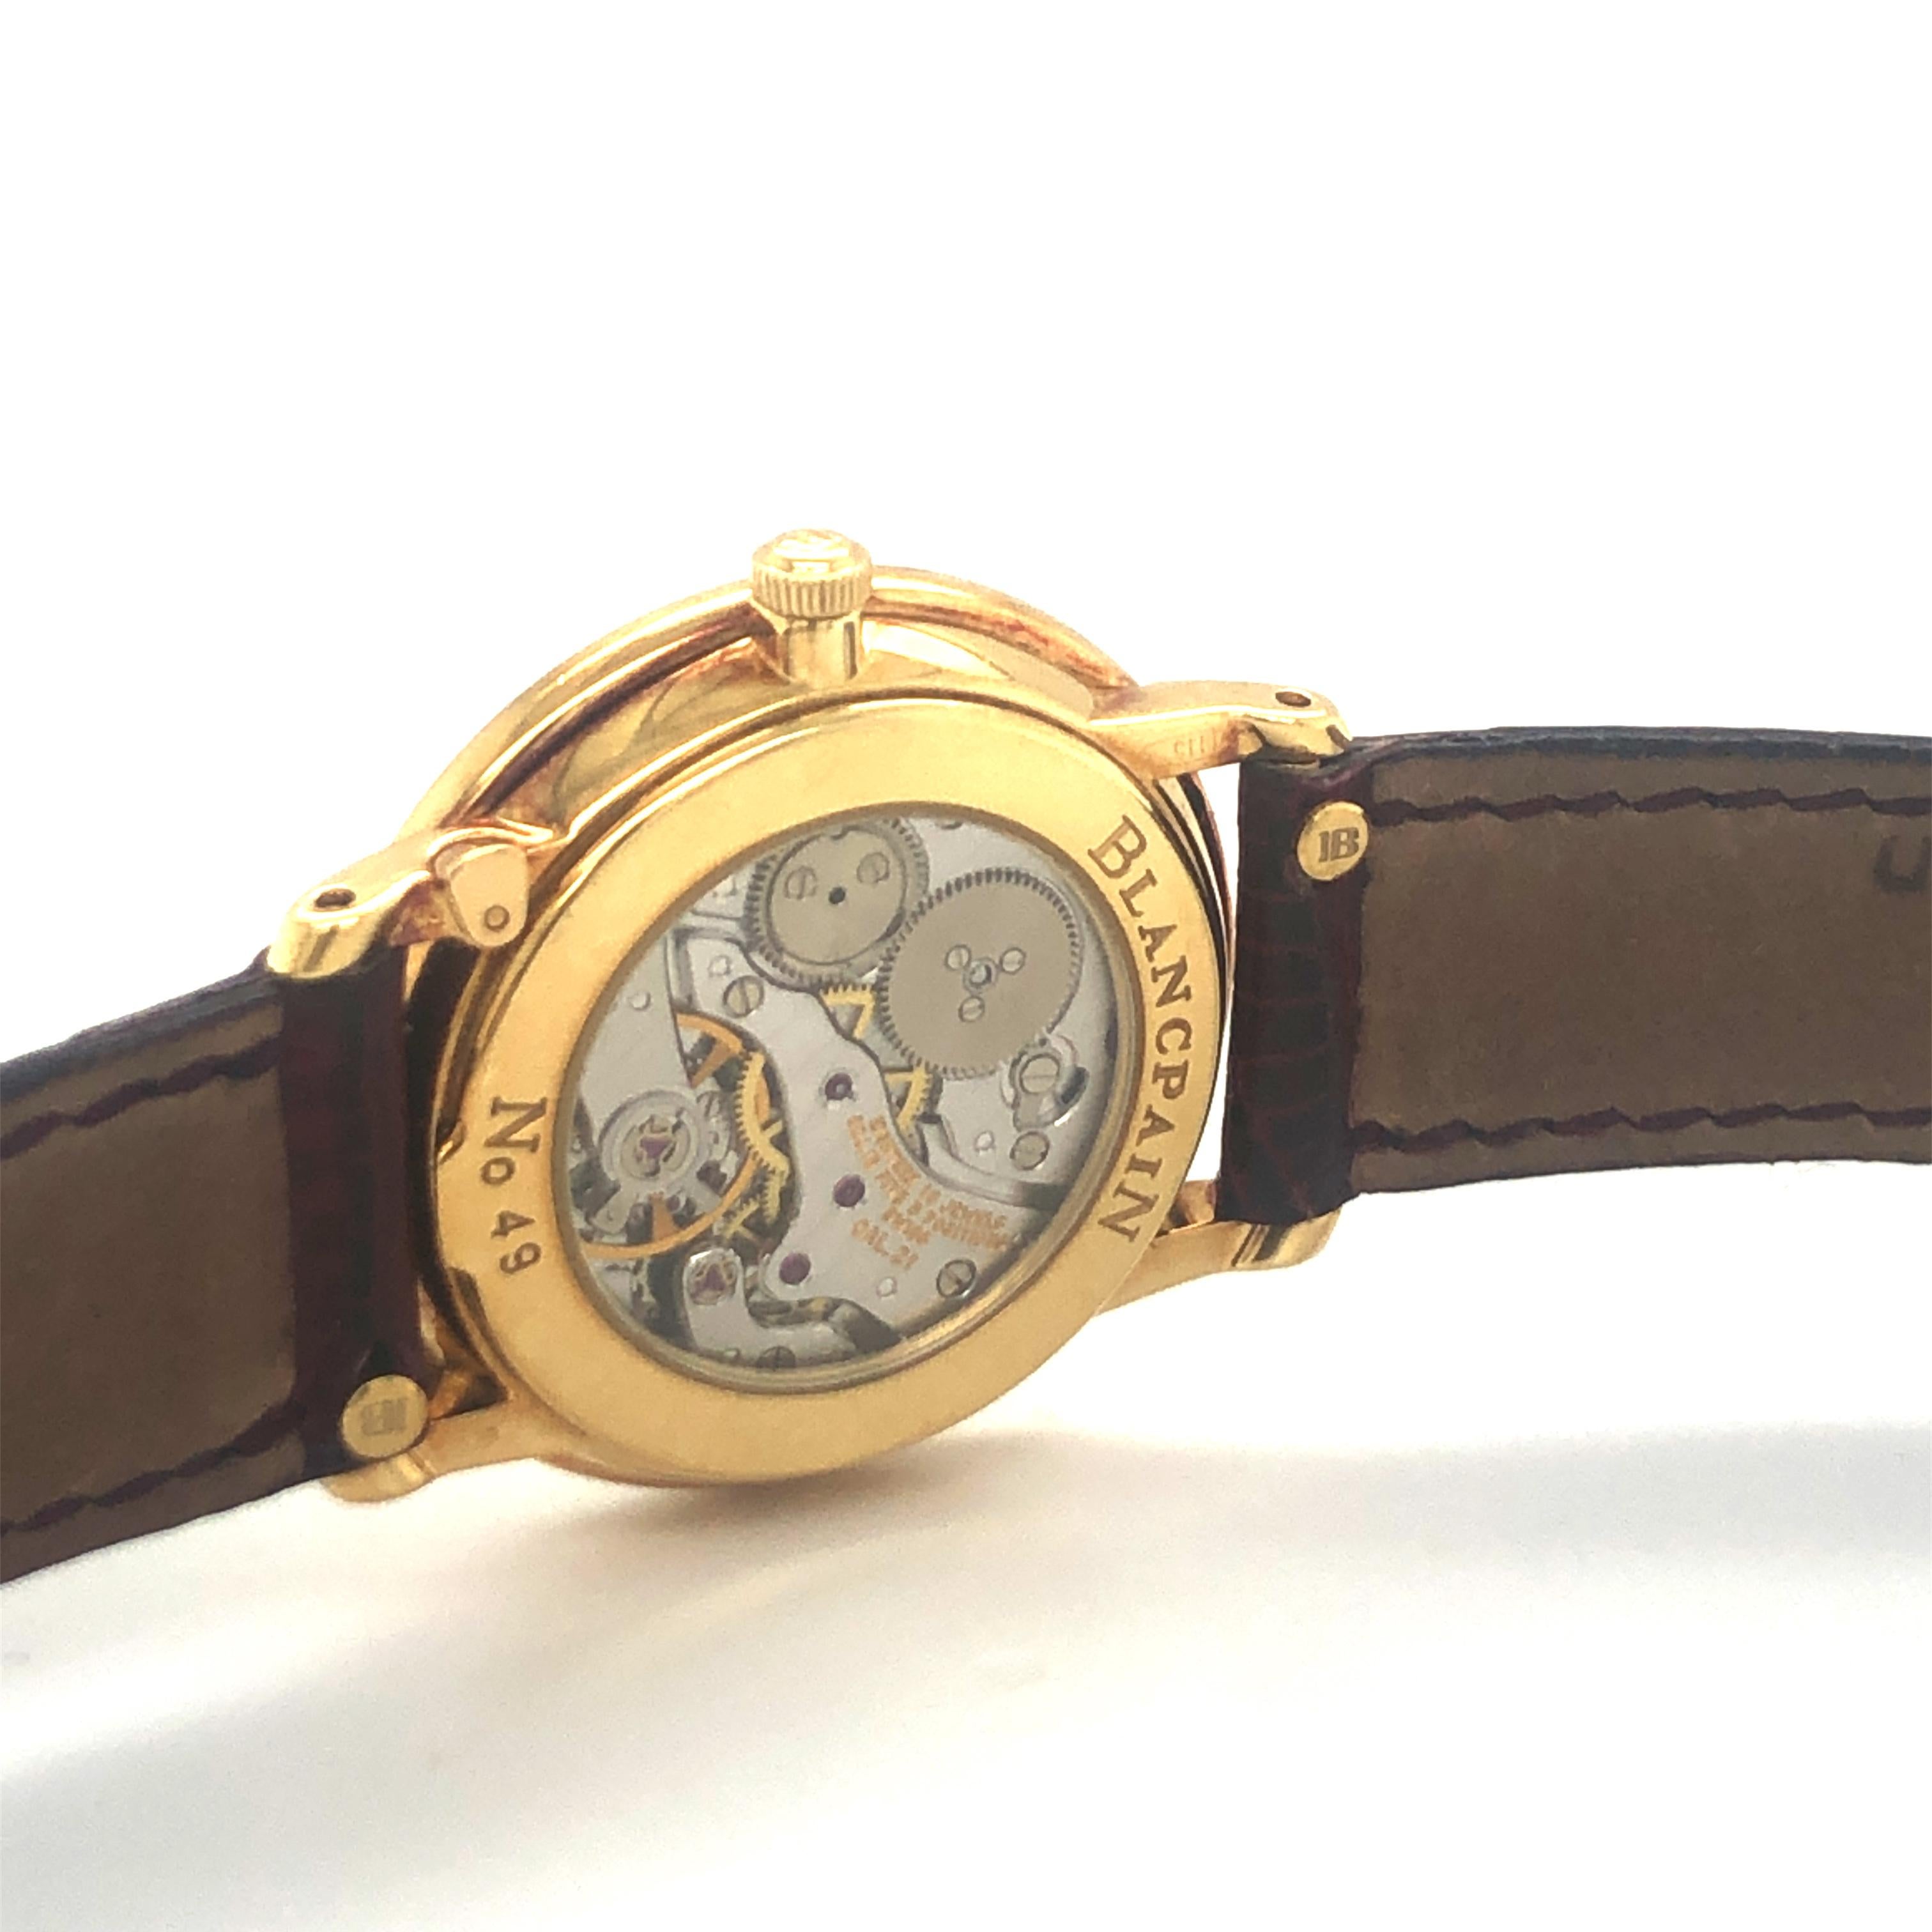 Brilliant Cut Elegant Blancpain Villeret Ladies Watch in Gold with Diamonds